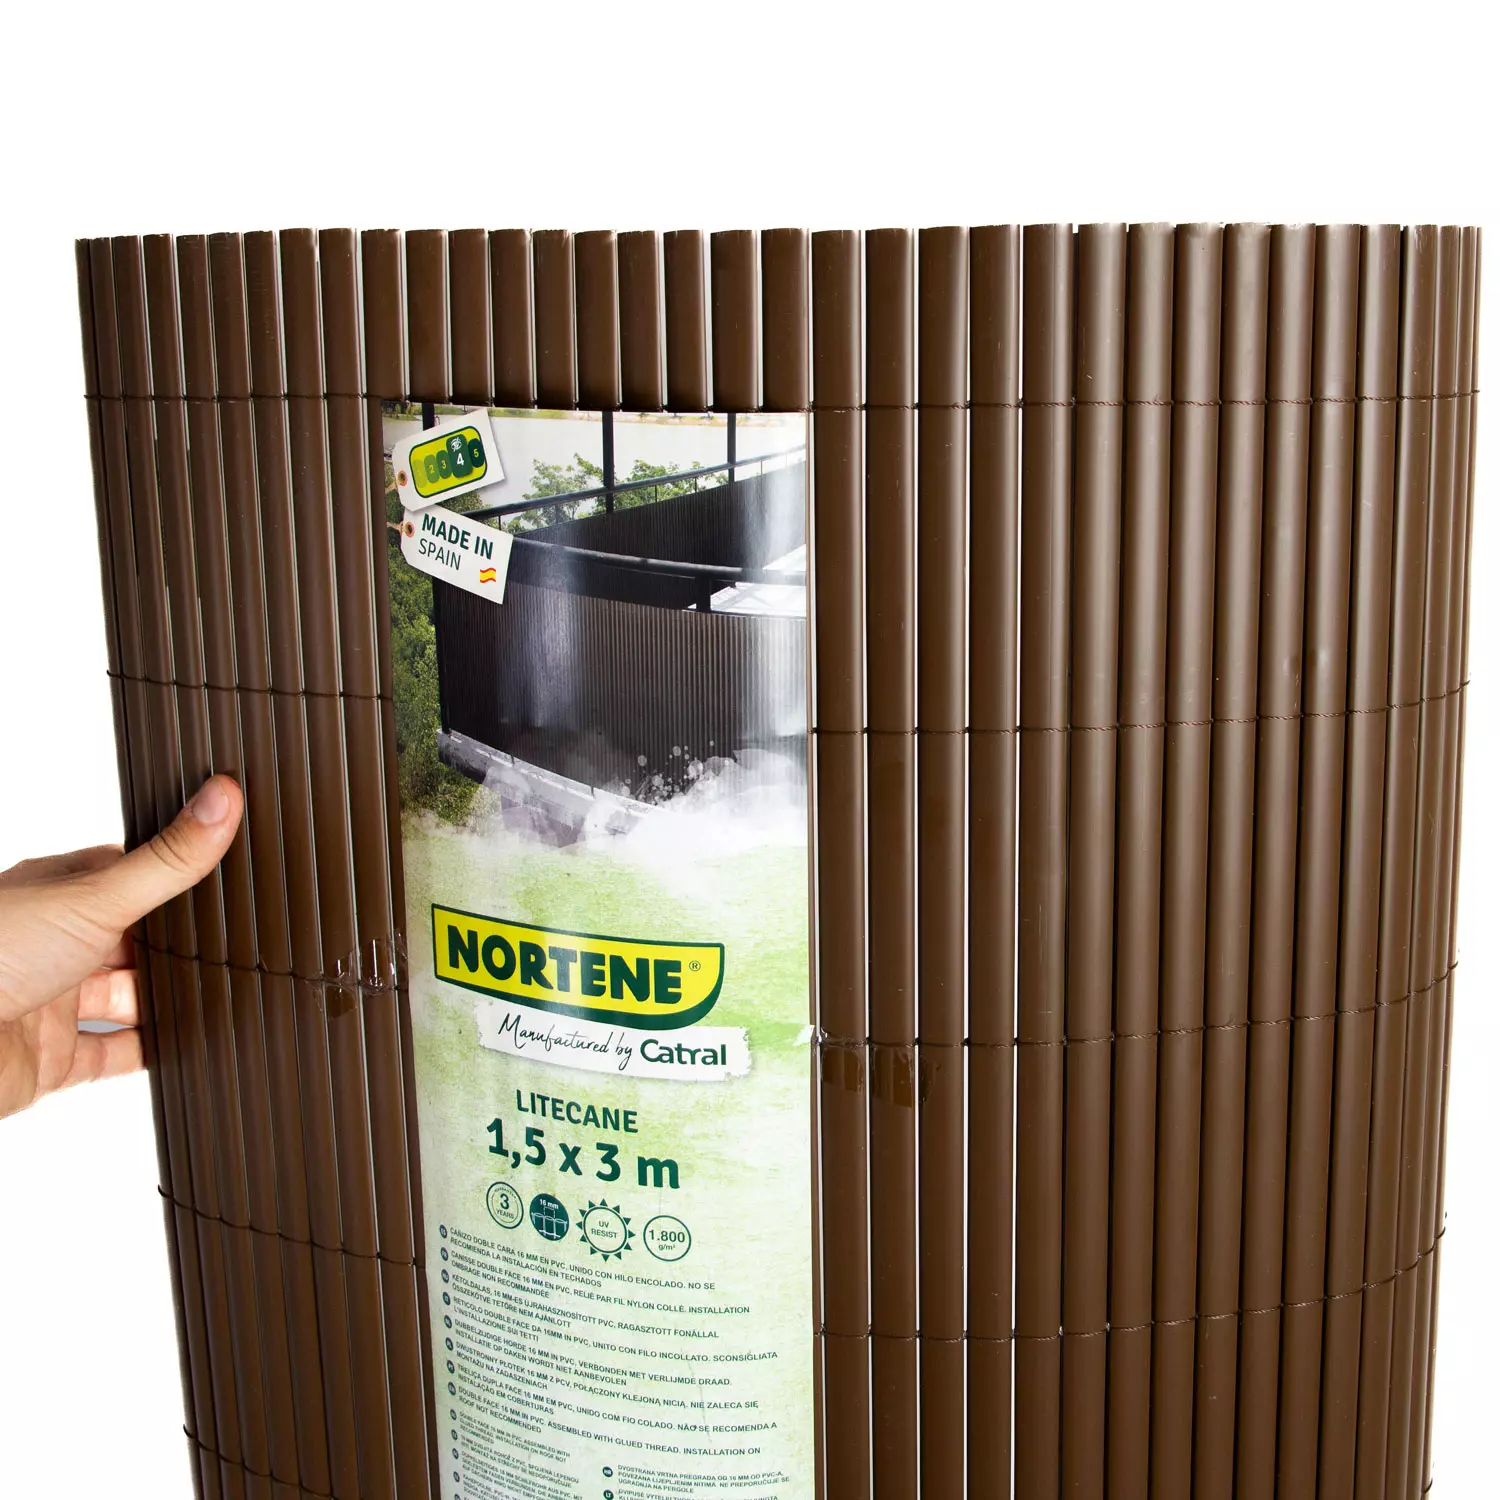 Nortene-Catral Litecane ovális profilú műanyag nád, 1,5x3m, barna